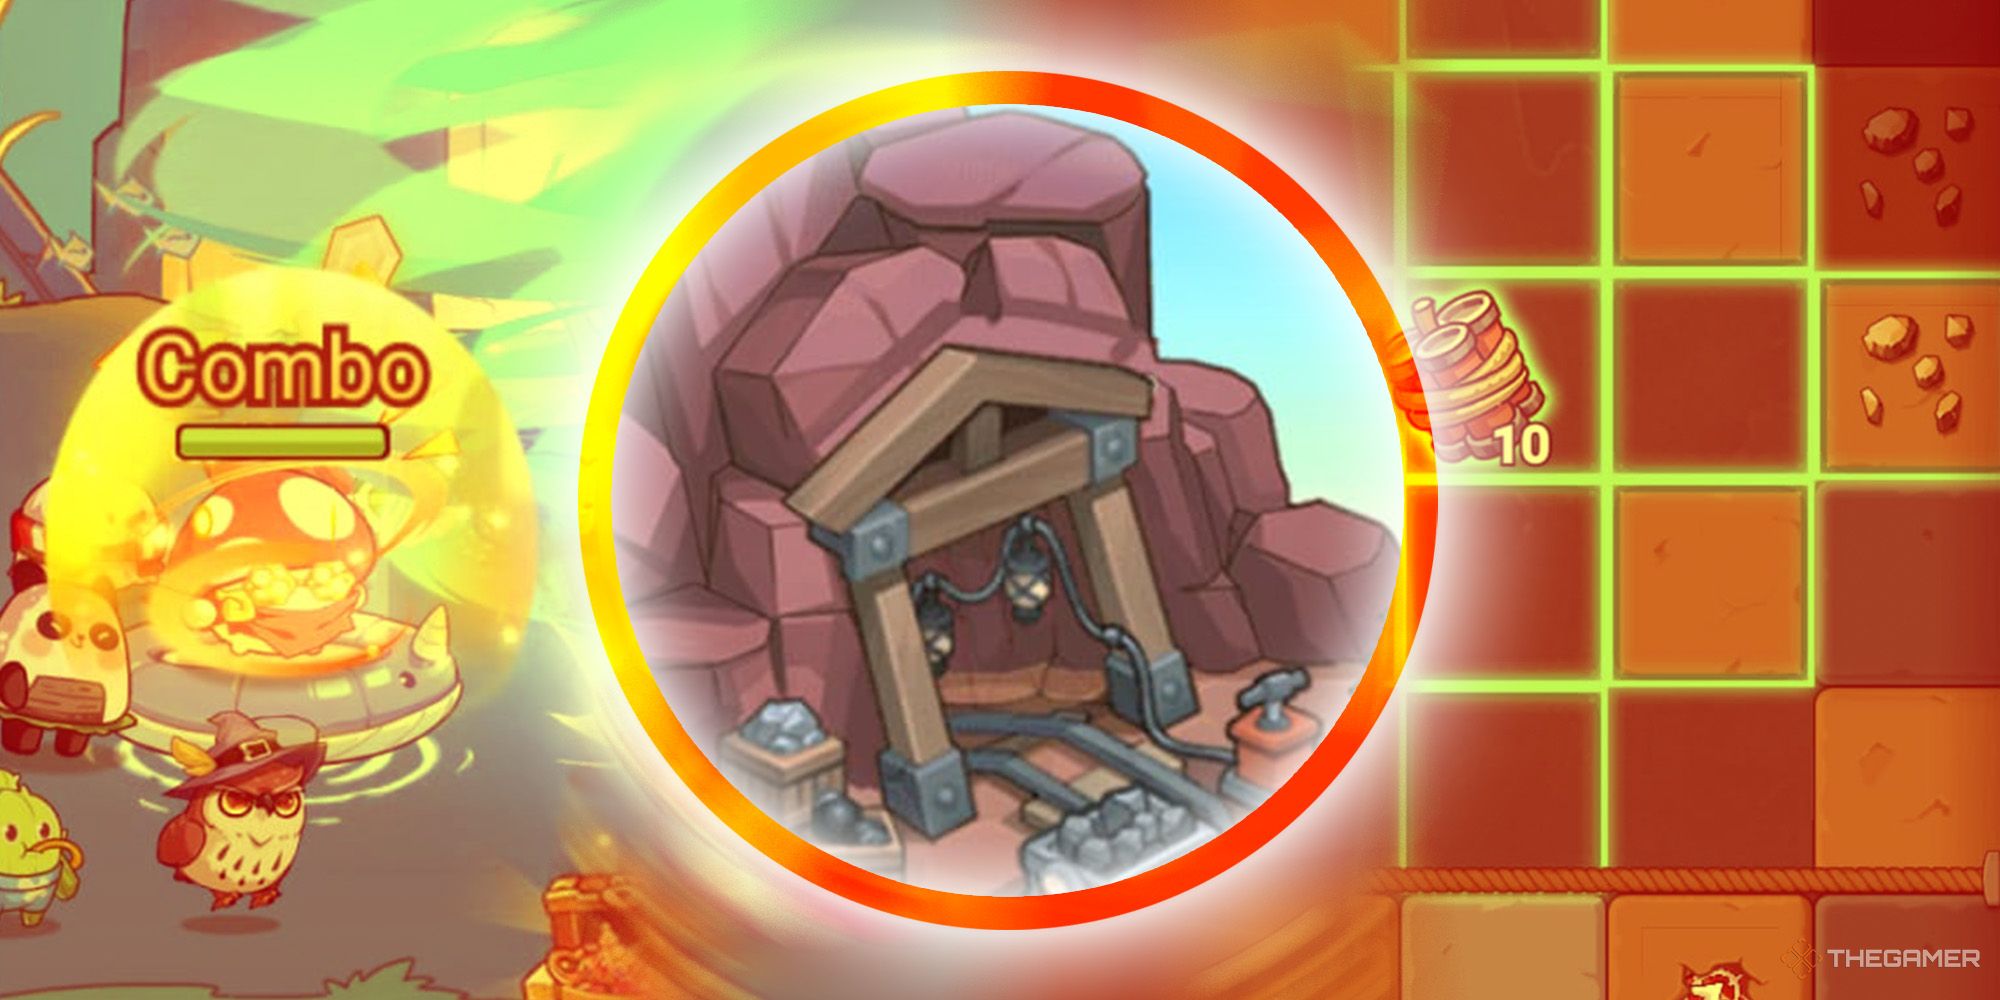 Legend of Mushroom - Mine entrance displayed on a circle between battling mushroom and mining zone